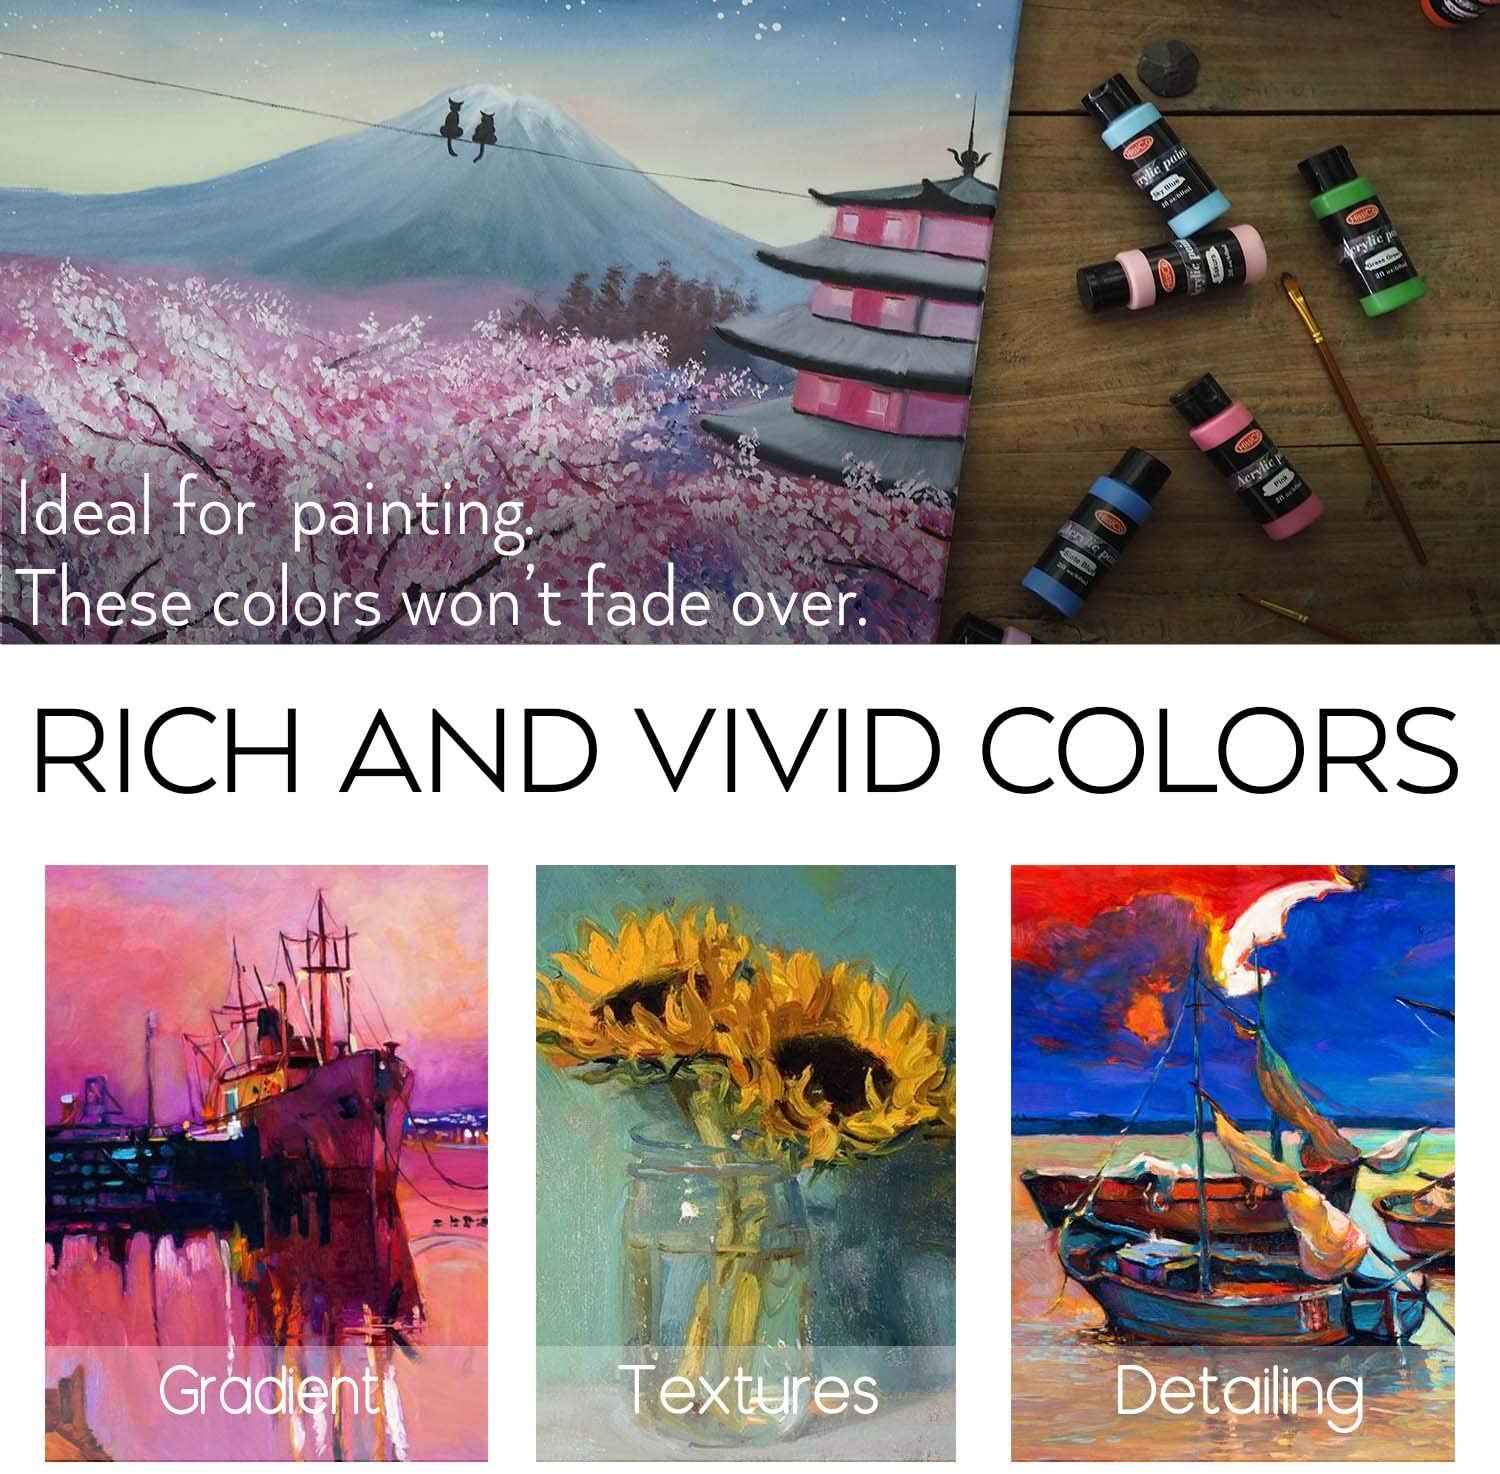 HissiCo Acrylic Paint Set of 24 Colors 2fl oz 60ml Bottles